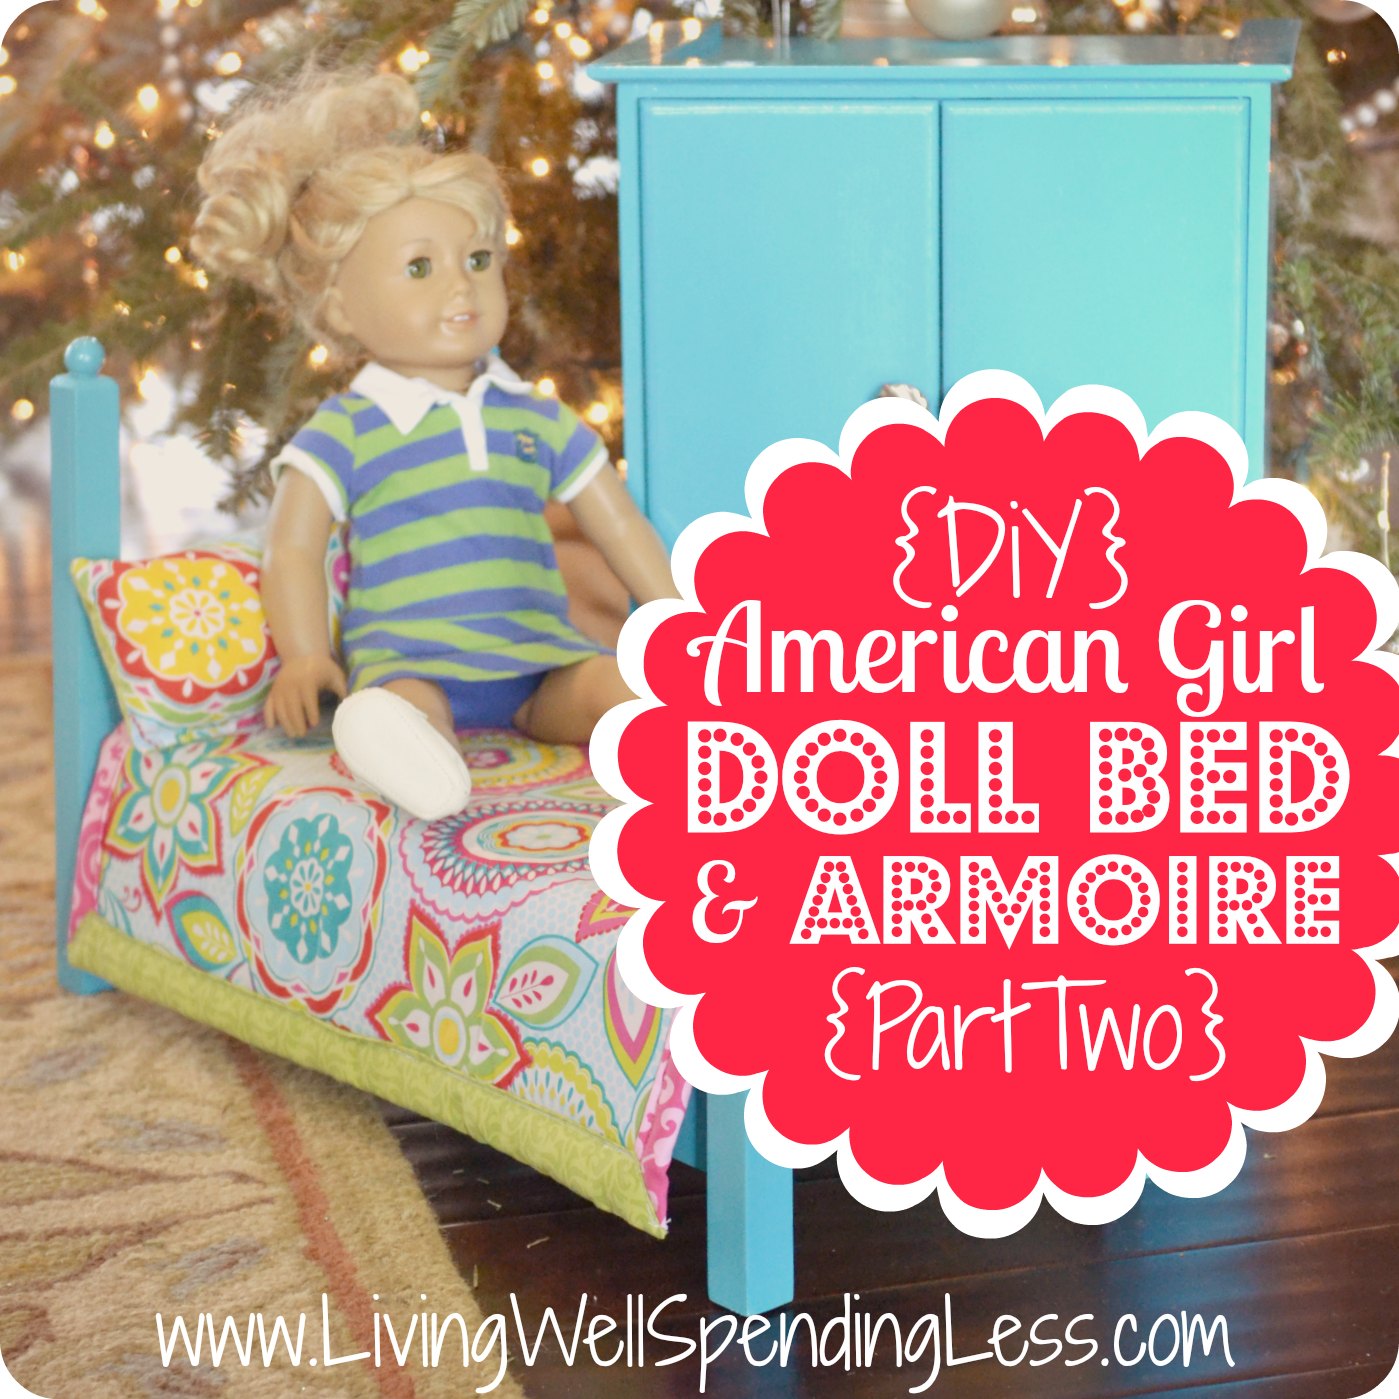 DiY American Girl Doll Bed amp Armoire Part 2 DiY AmericanGirl